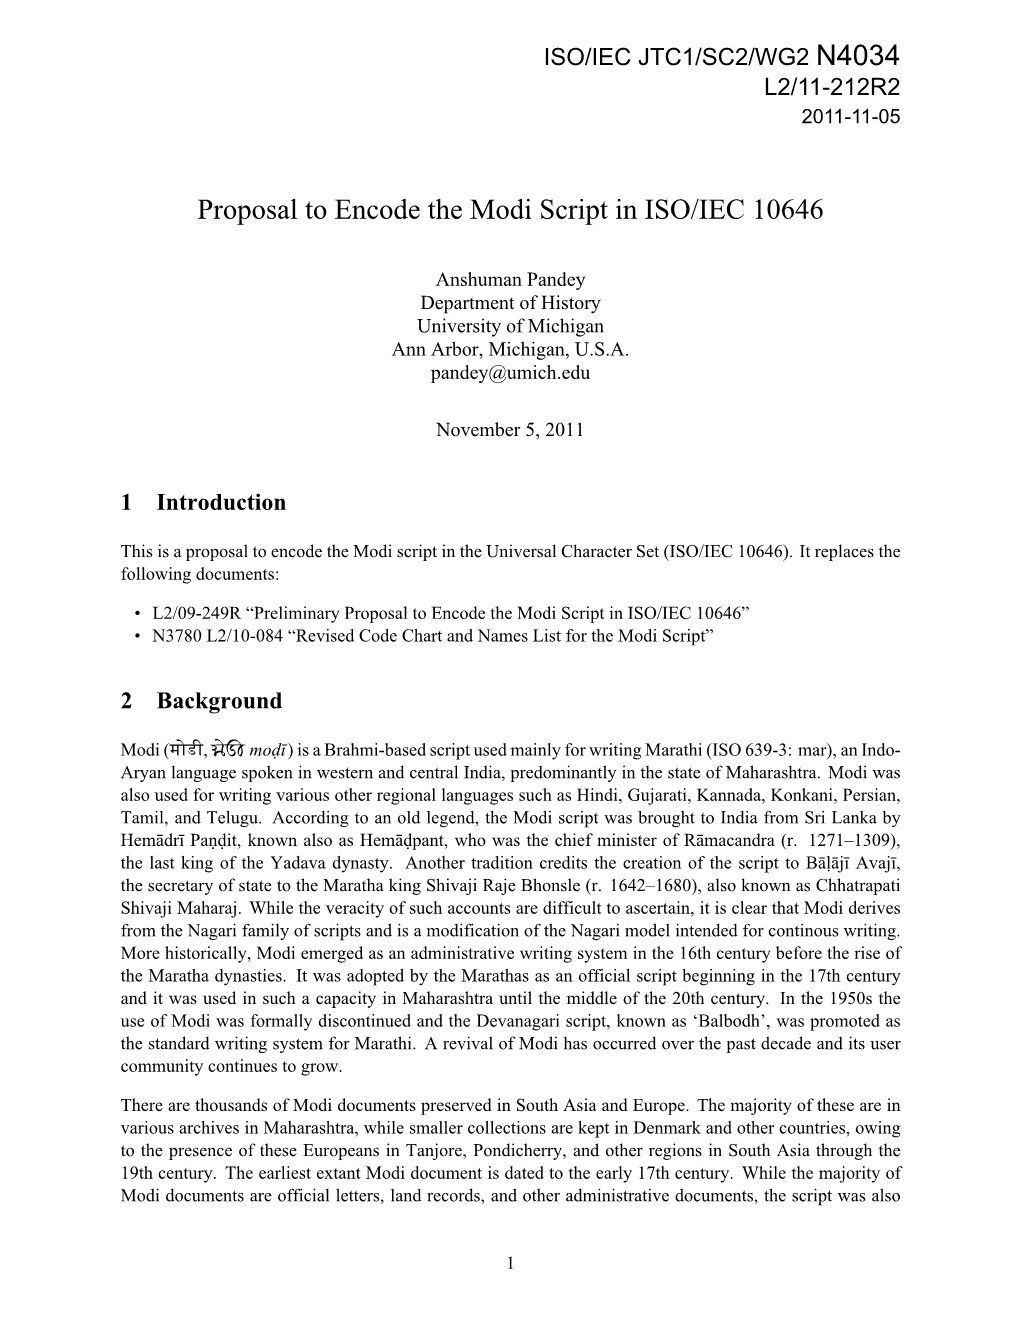 N4034 Proposal to Encode the Modi Script in ISO/IEC 10646